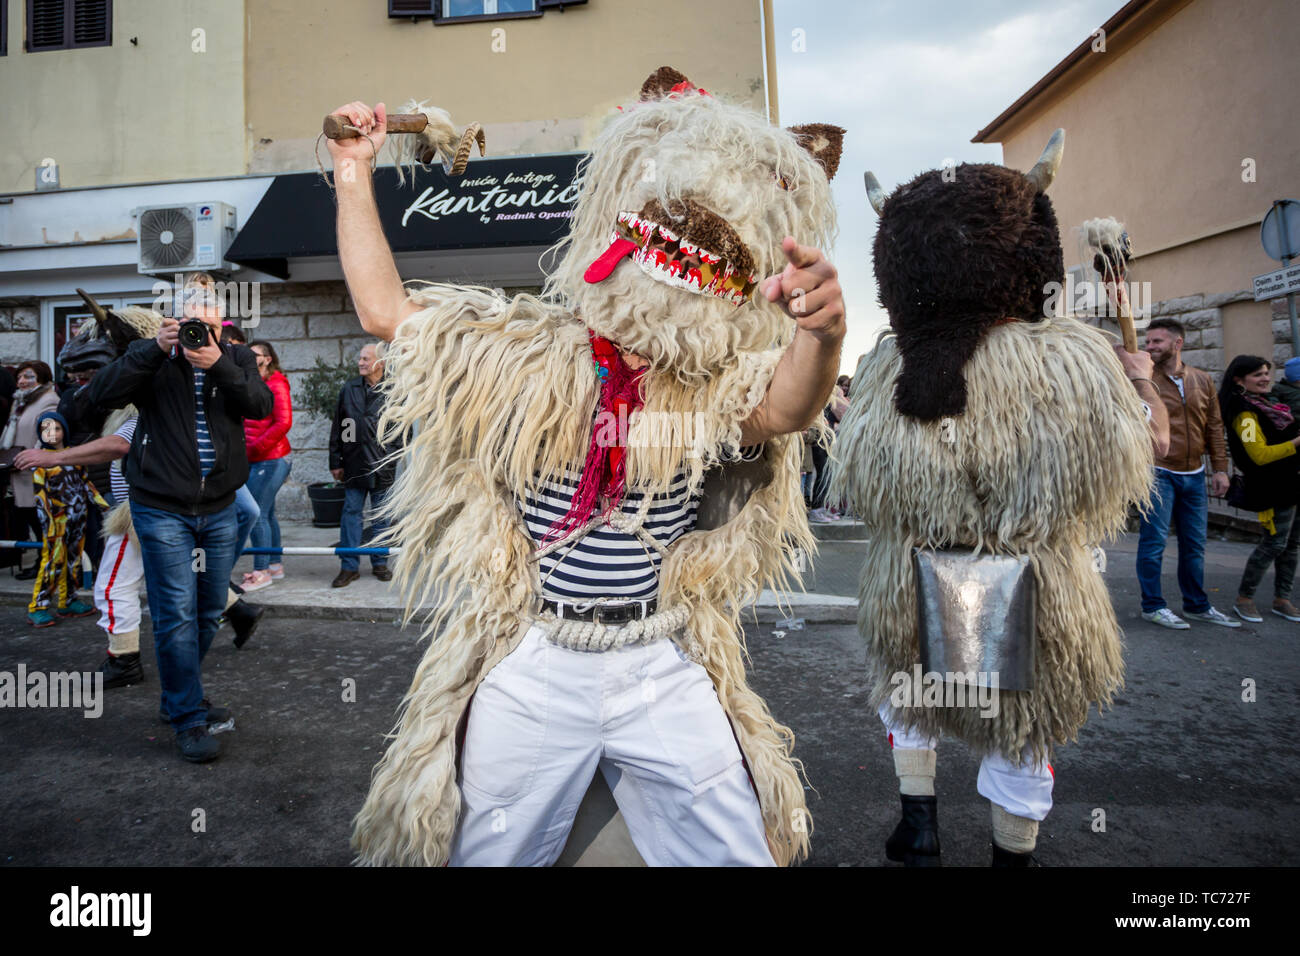 Matulji, Croatia - 3rd February, 2019 : Traditional carnival parade of bellringers with big cattle bells passing thru the street of Matulji, during th Stock Photo